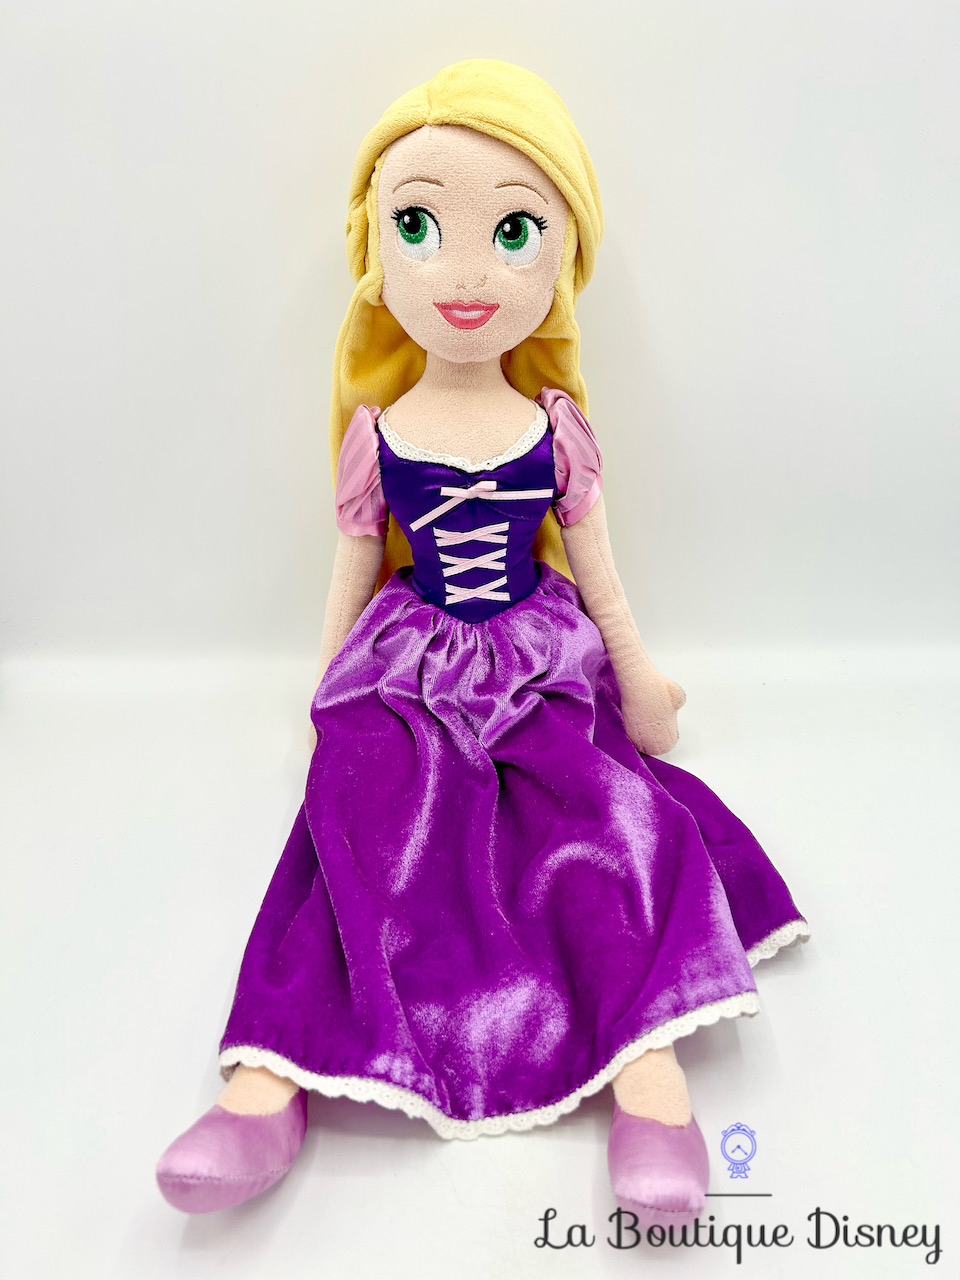 Poupée chiffon Raiponce Disney Parks Disneyland peluche princesse robe velours violet 52 cm